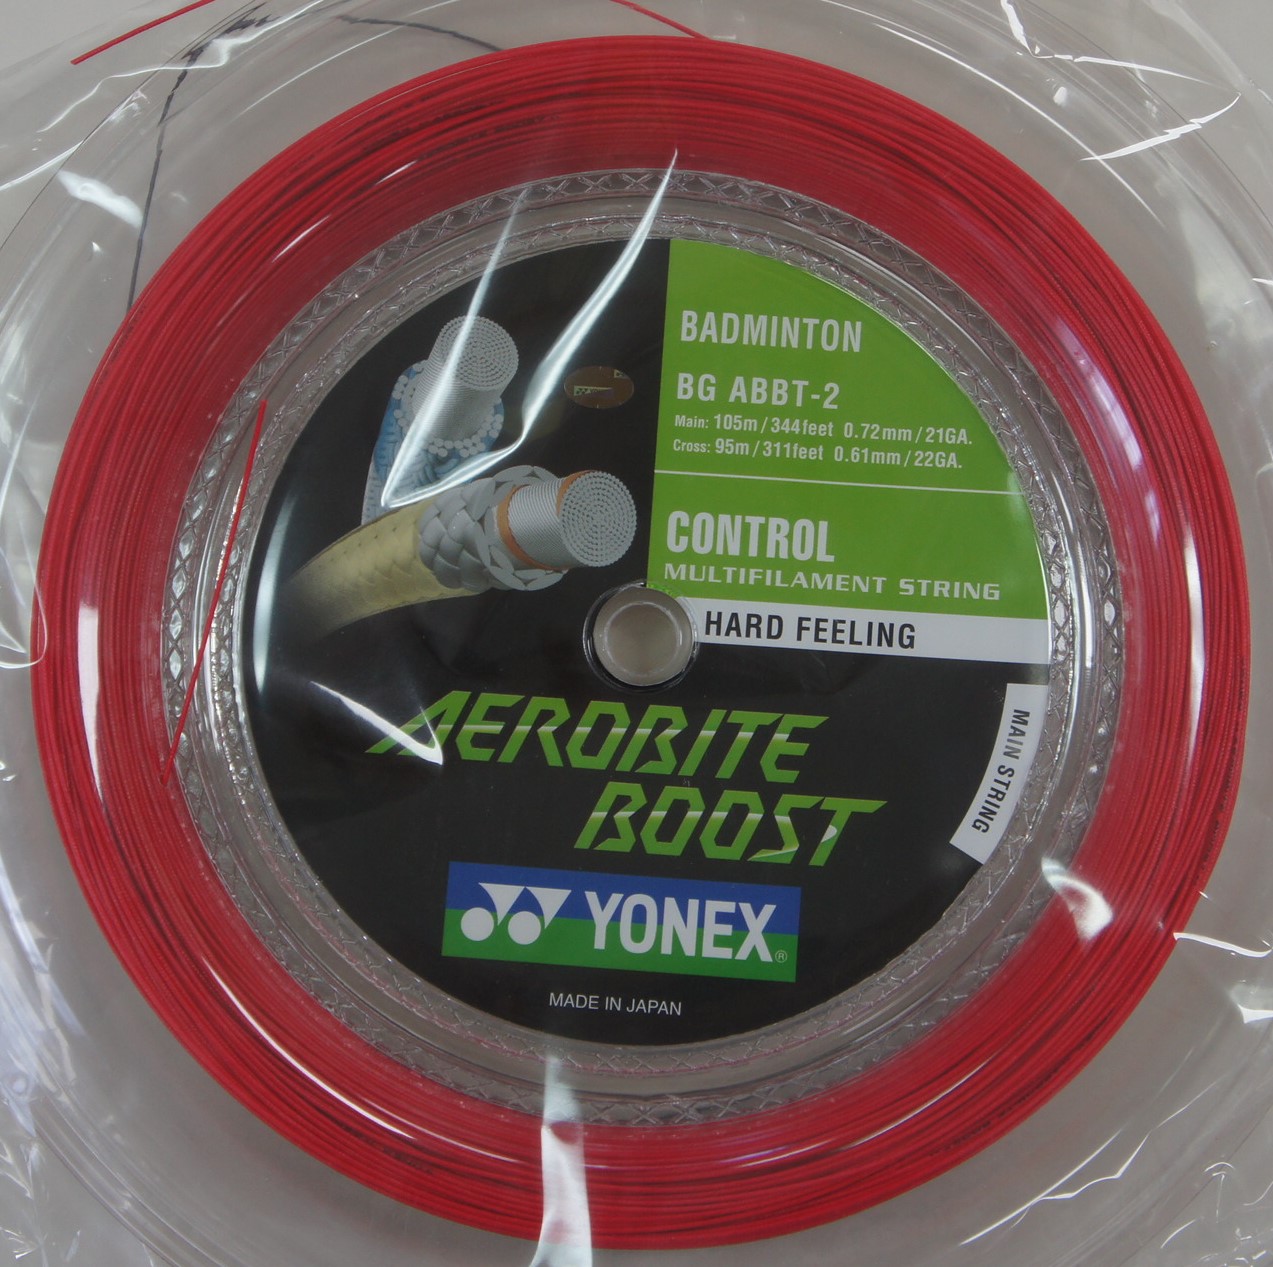 YONEX Aerobite Boost Badminton String - 200m - BGABBT-2 - Gray/Red